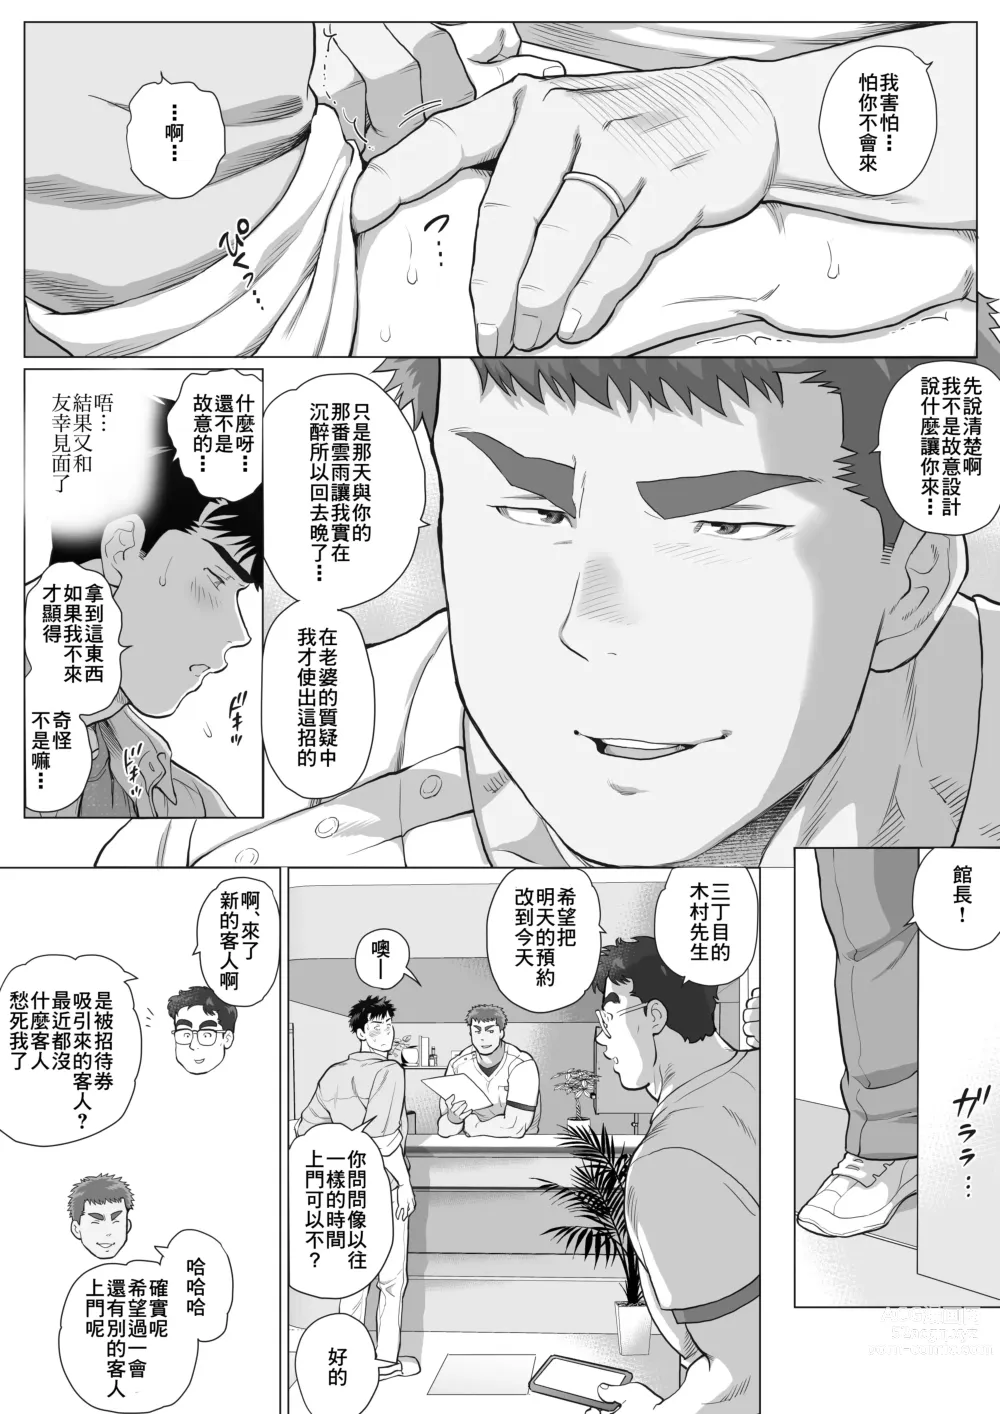 Page 4 of manga 直人爸爸与友幸爸爸 第四话